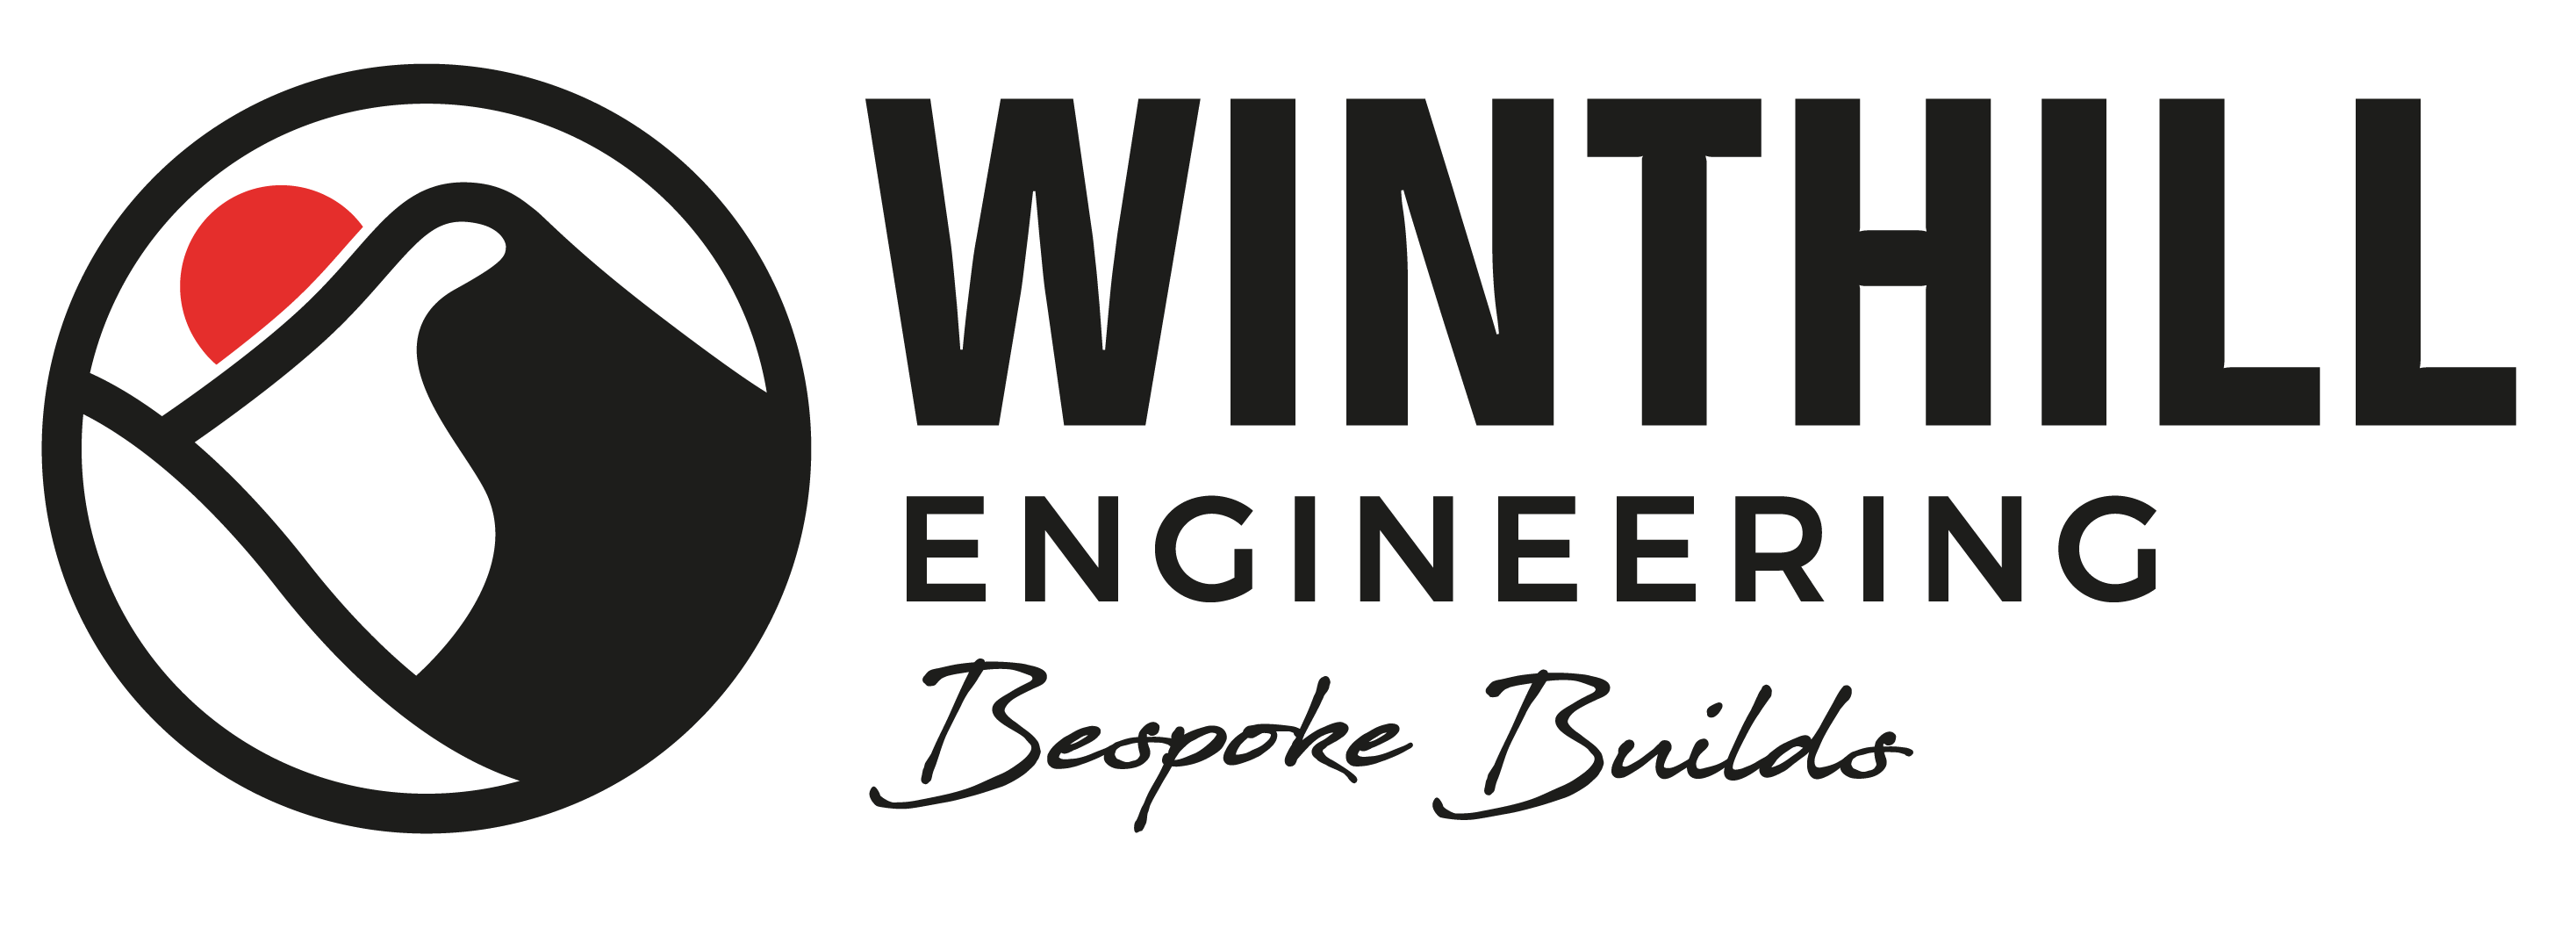 Winthill Engineering